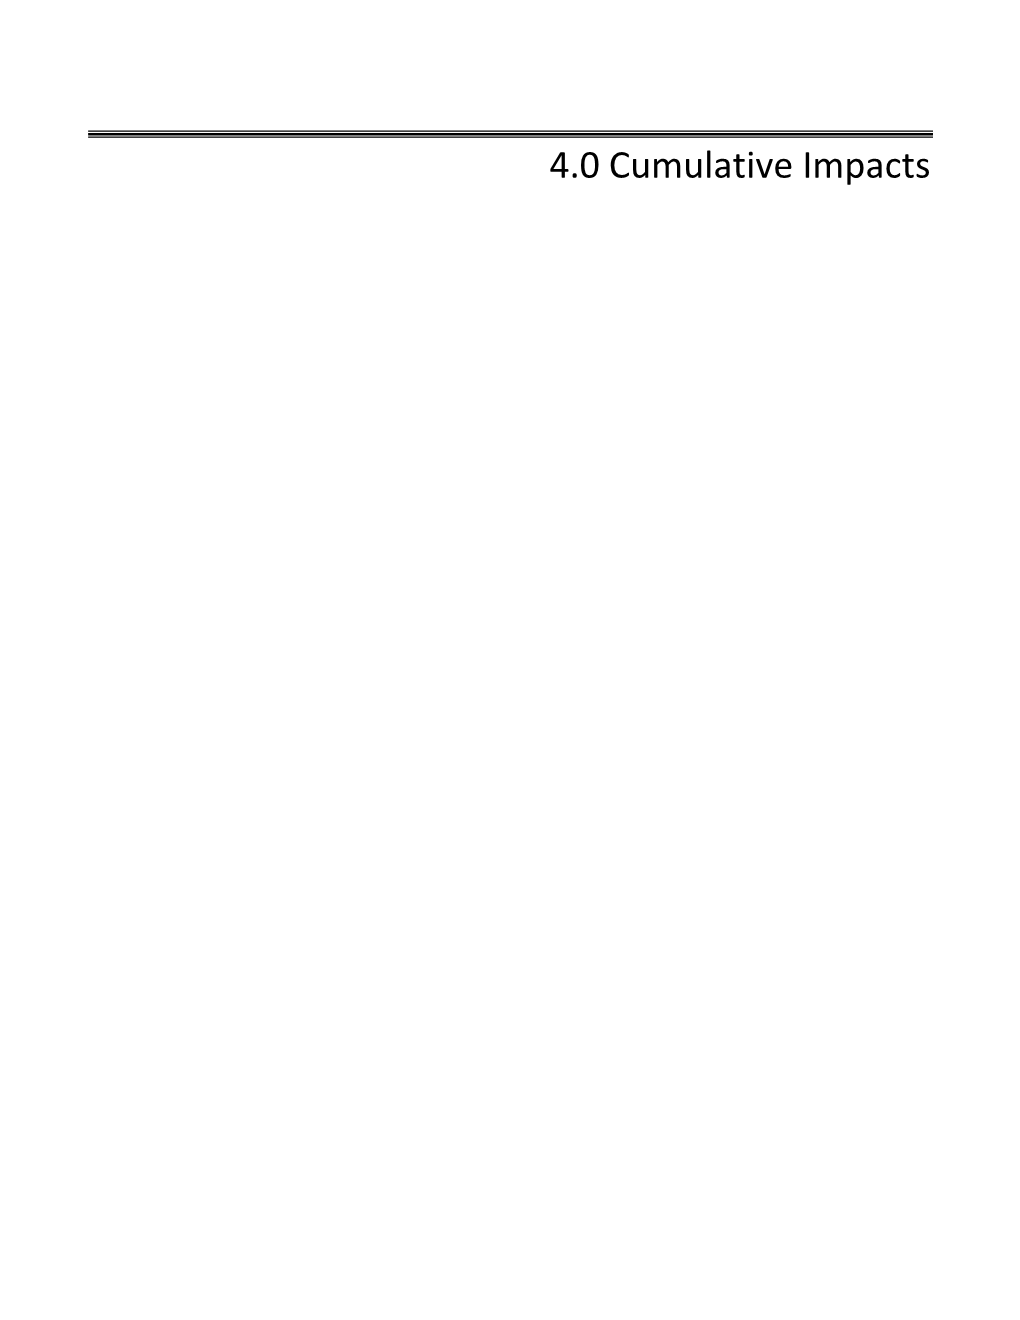 Section 4.0 Cumulative Impacts